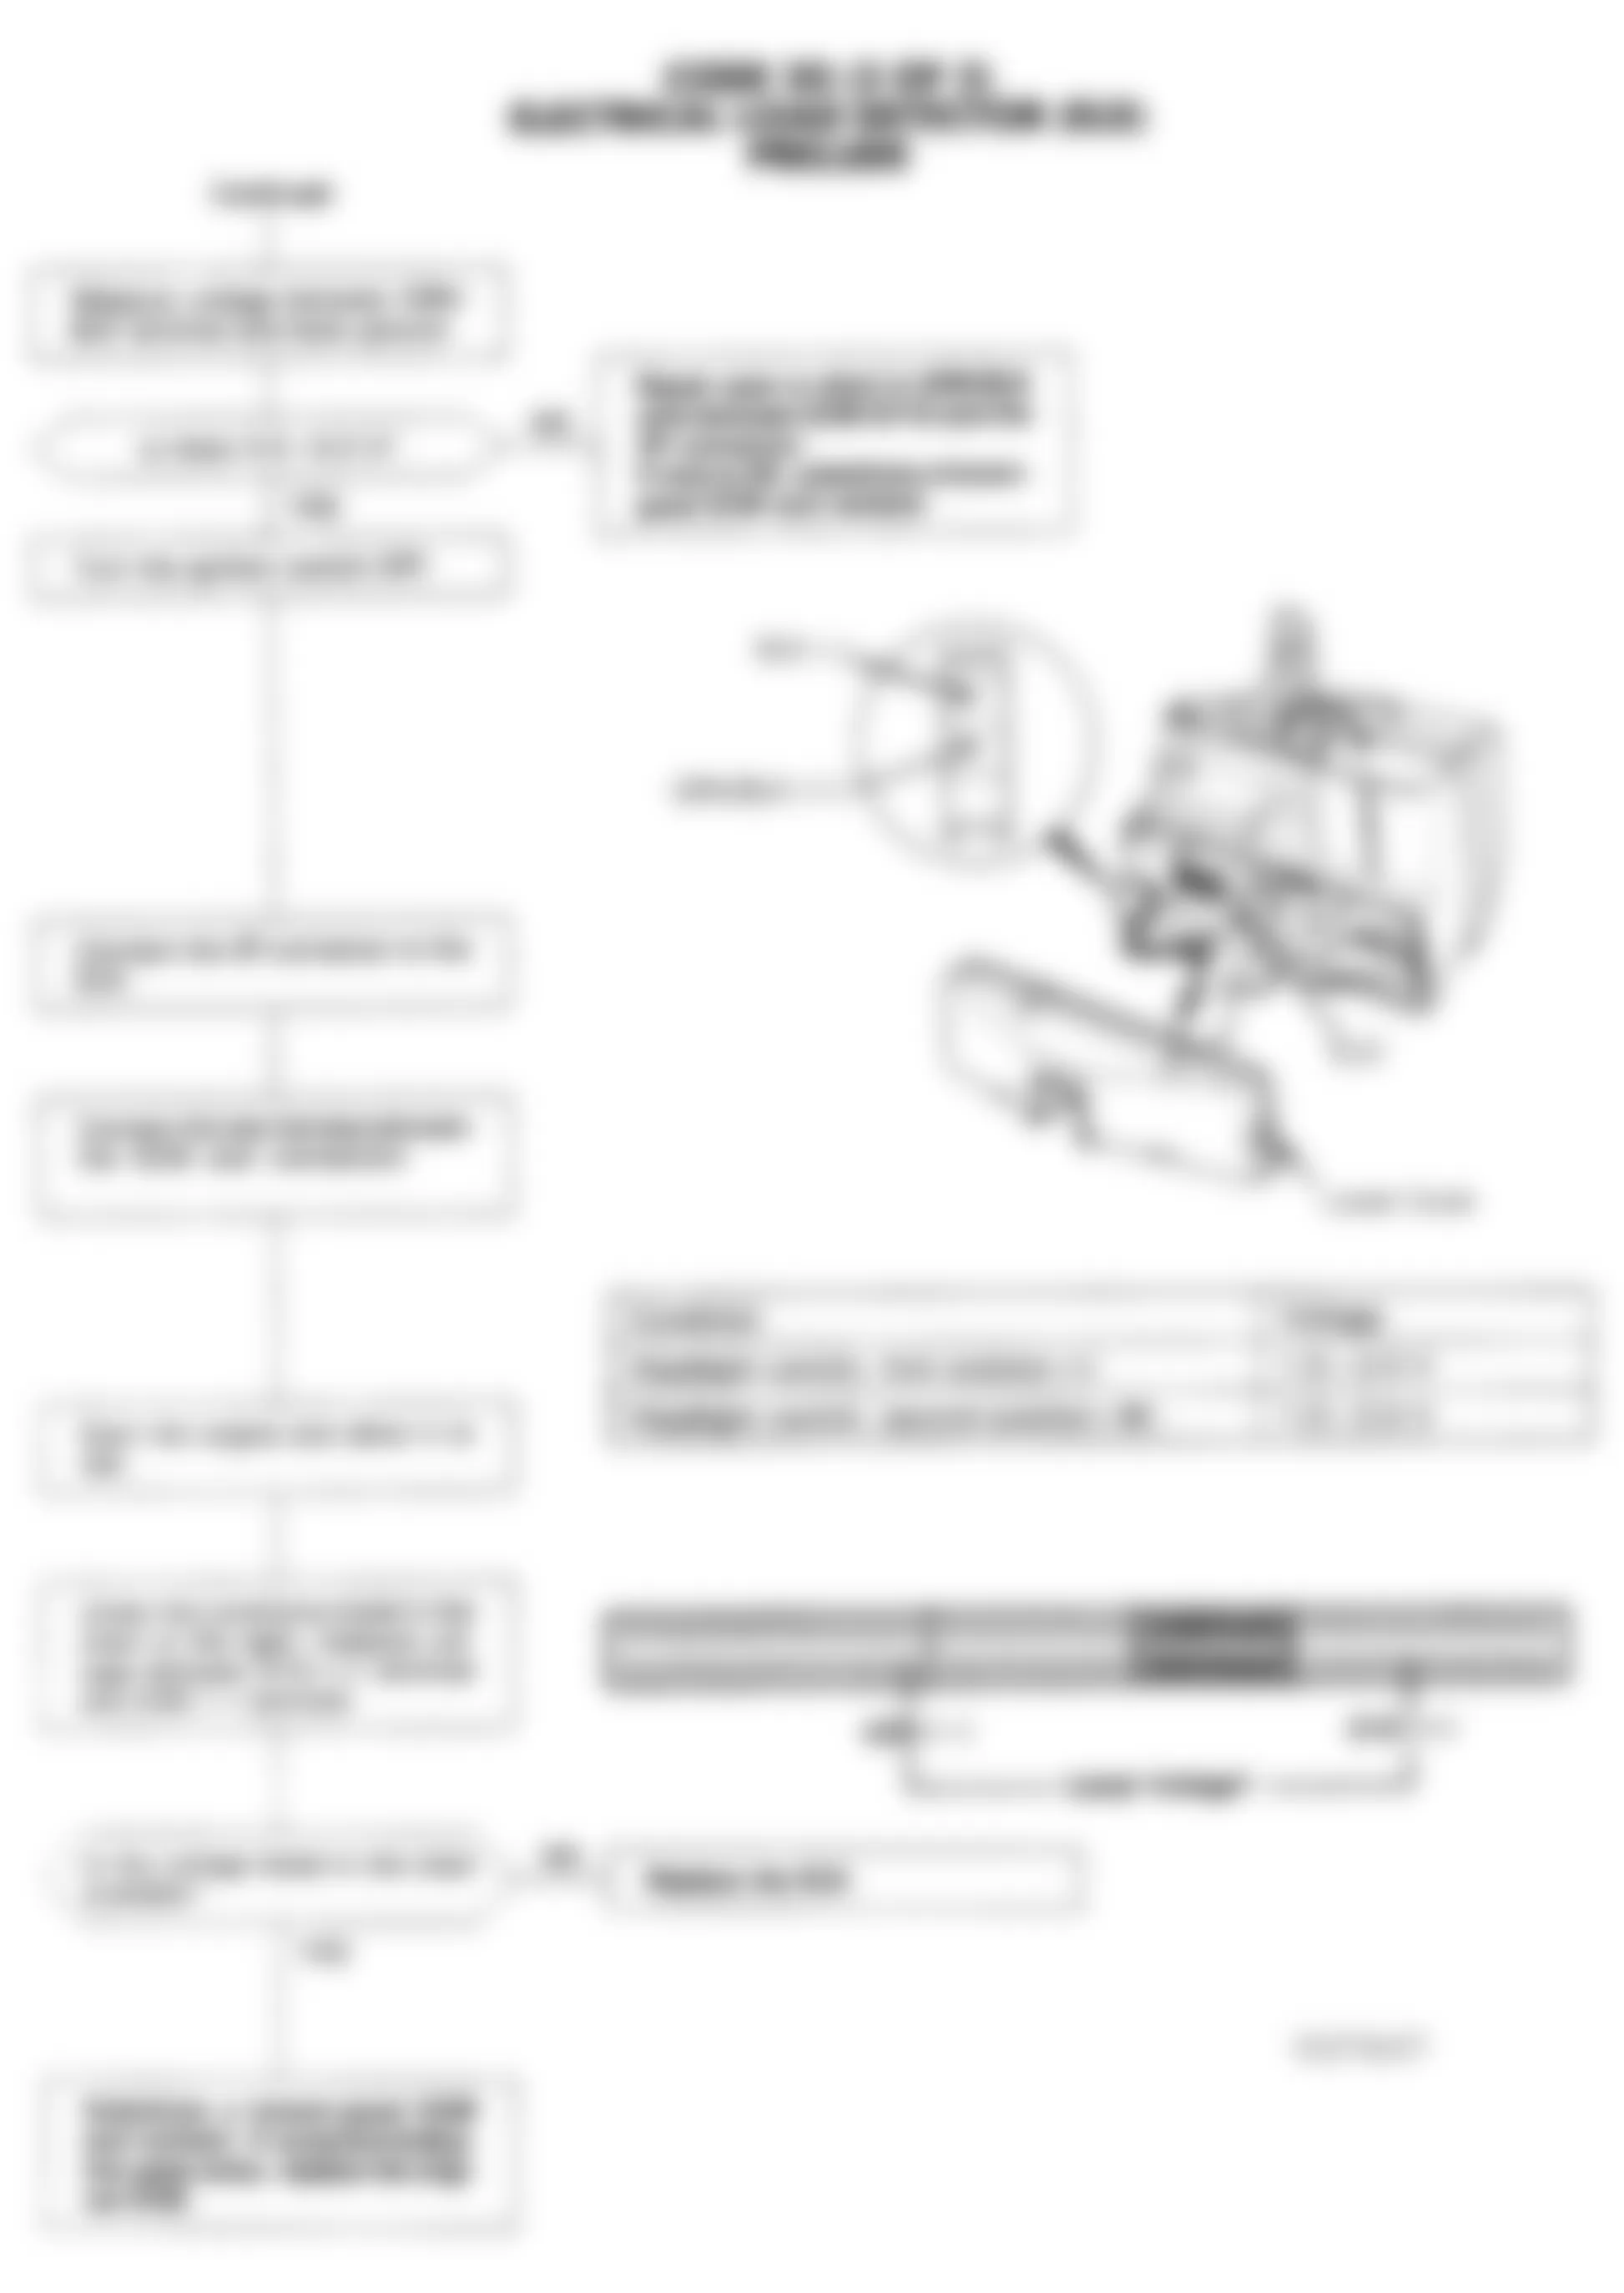 Honda Prelude VTEC 1993 - Component Locations -  Code 20 Flowchart, Electrical Load Detector (2 of 2)